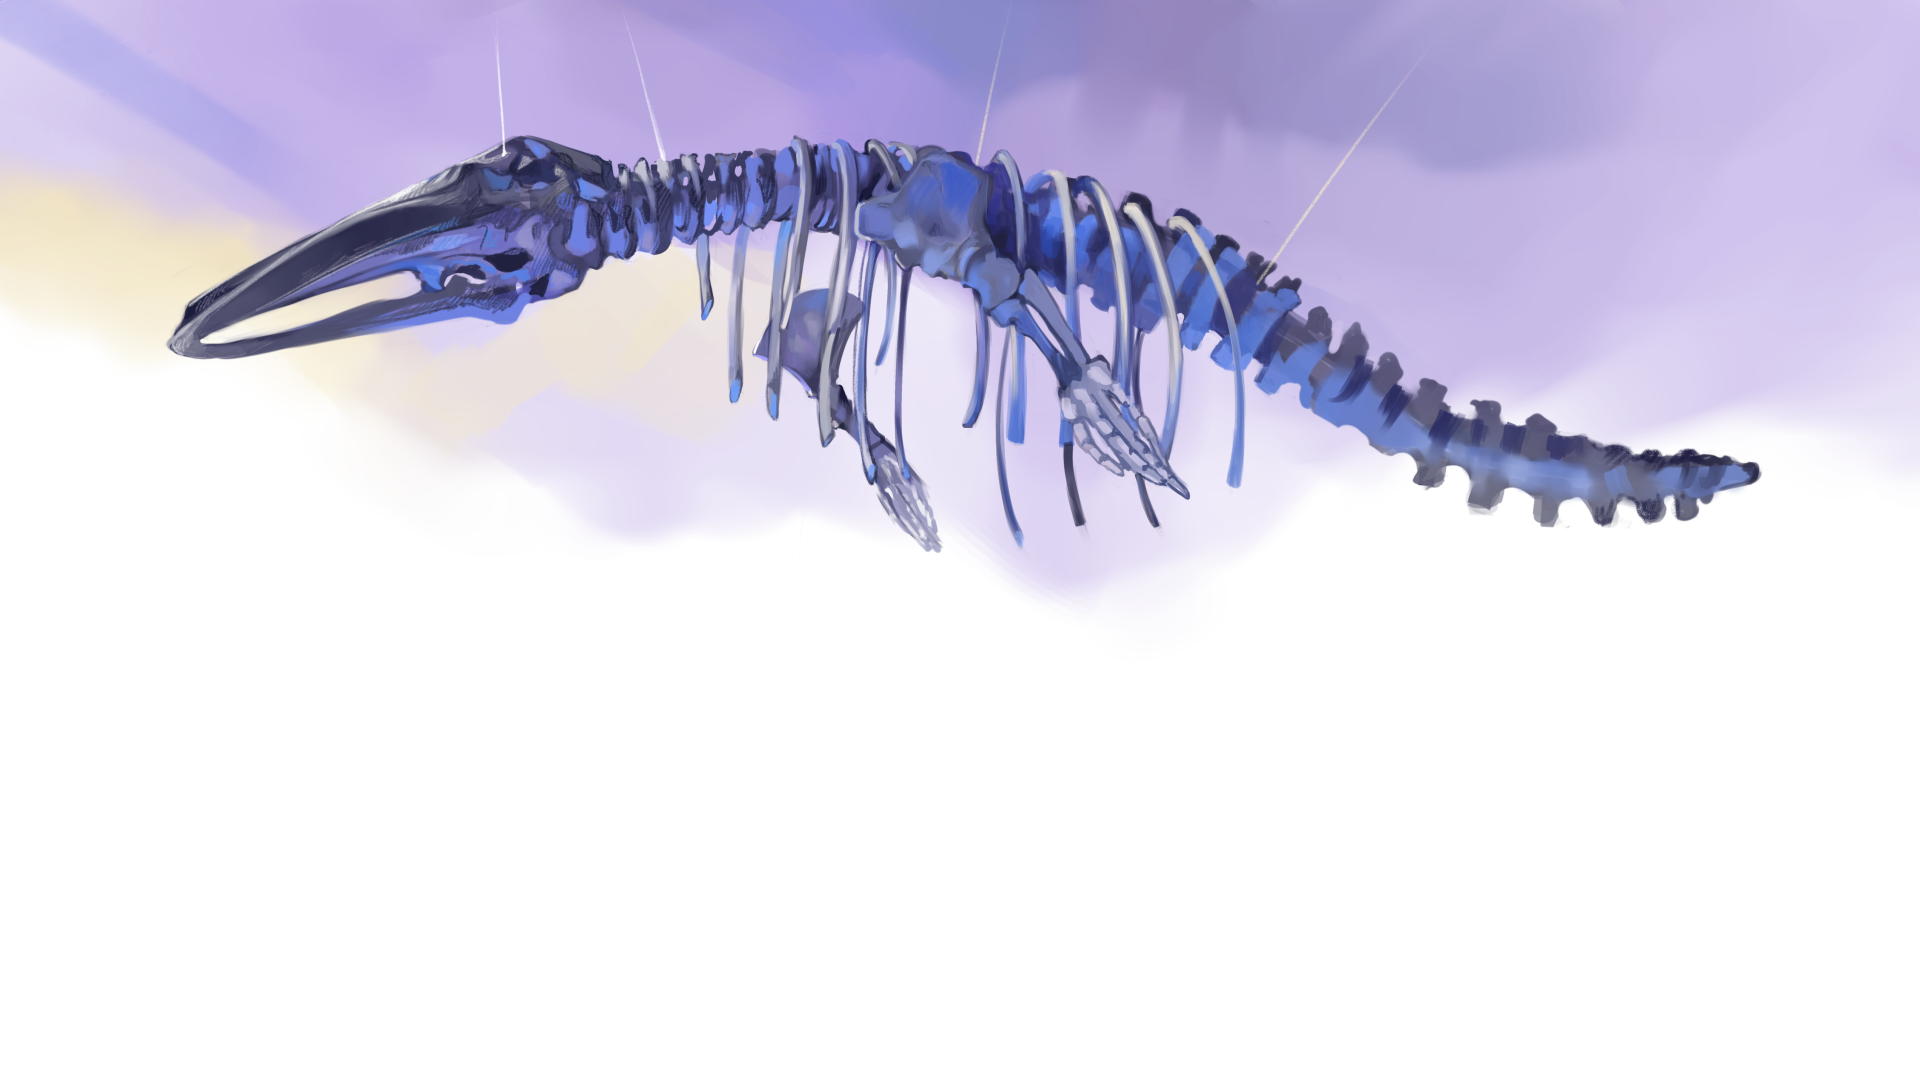 Ilustración esqueleto ballena minke